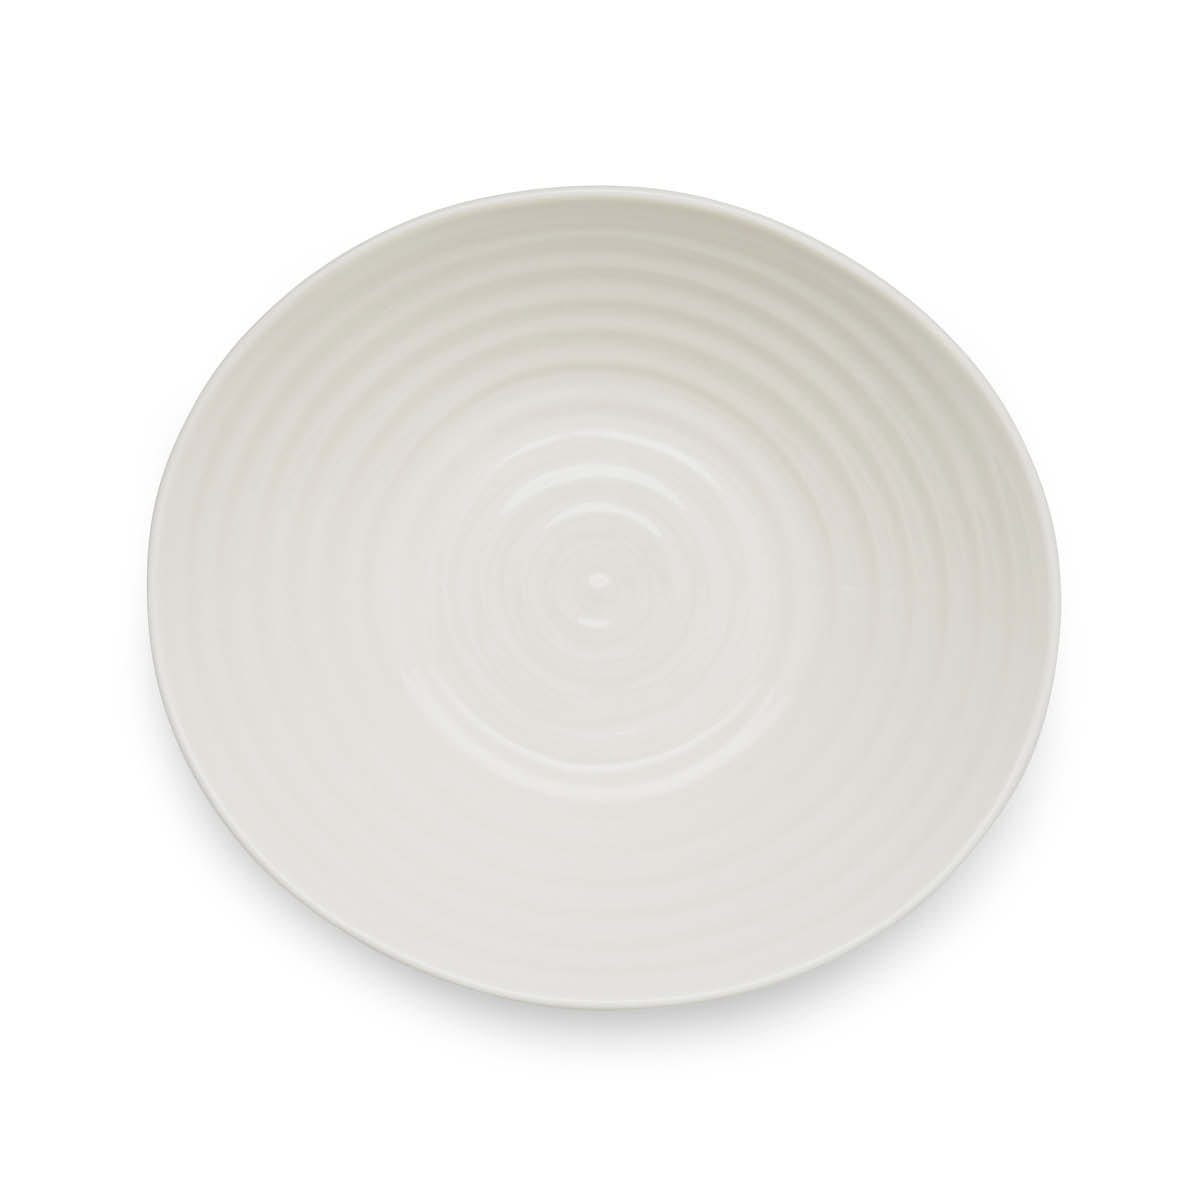 Sophie Conran Set of 4 Cereal Bowls, White